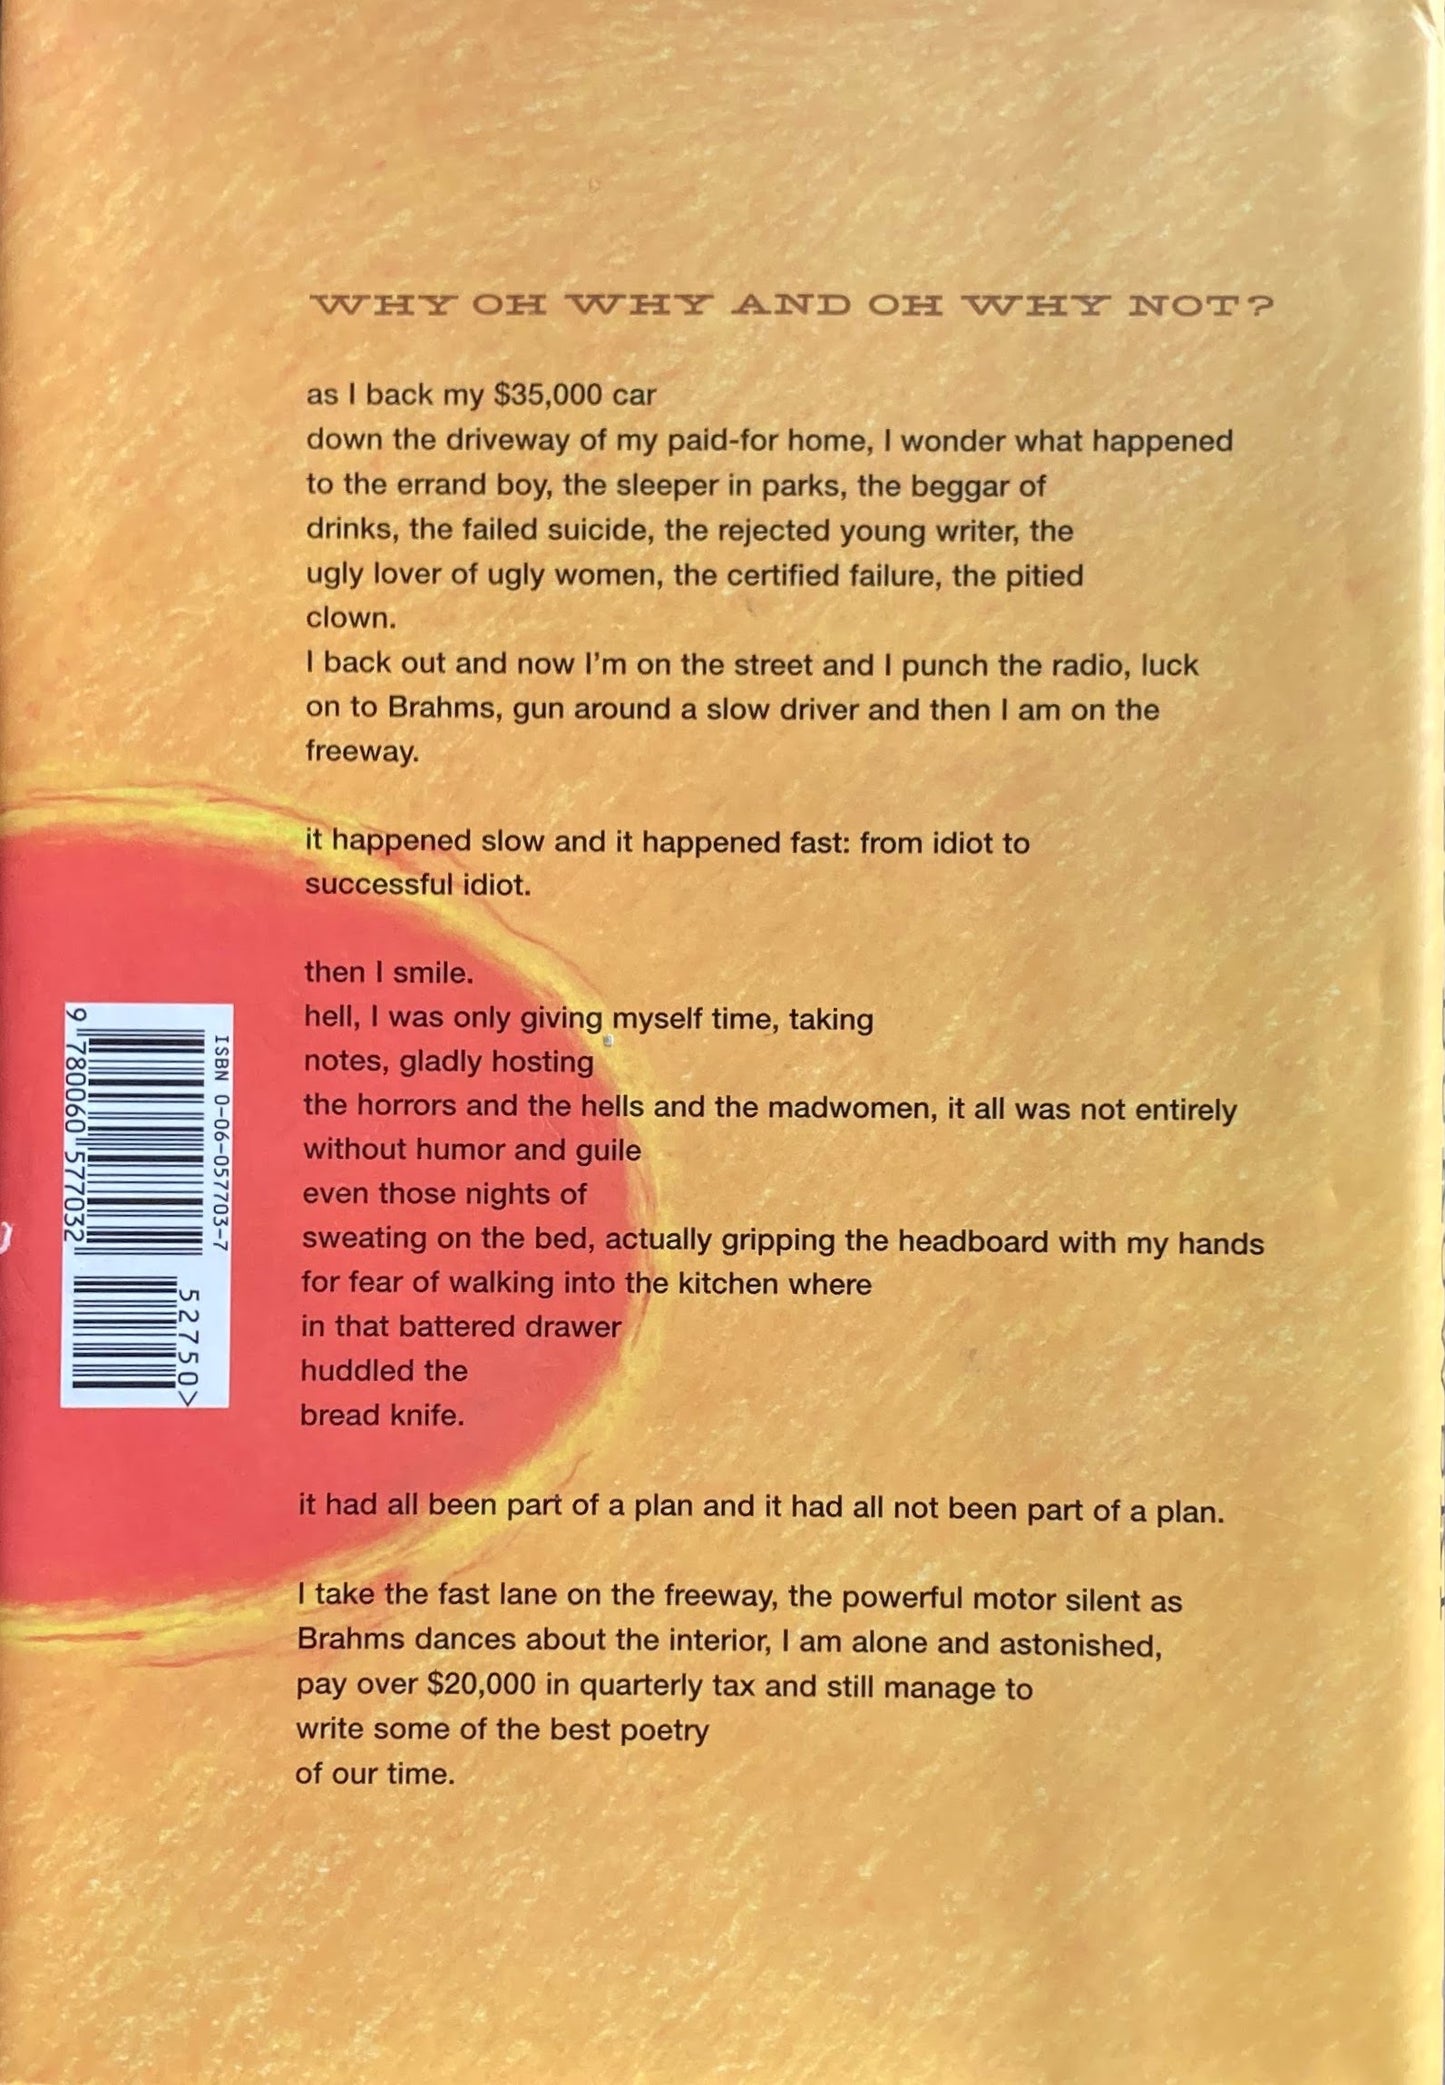 Slouching Toward Nirvana　New Poems 　Charles Bukowski 　チャールズ・ブコウスキー